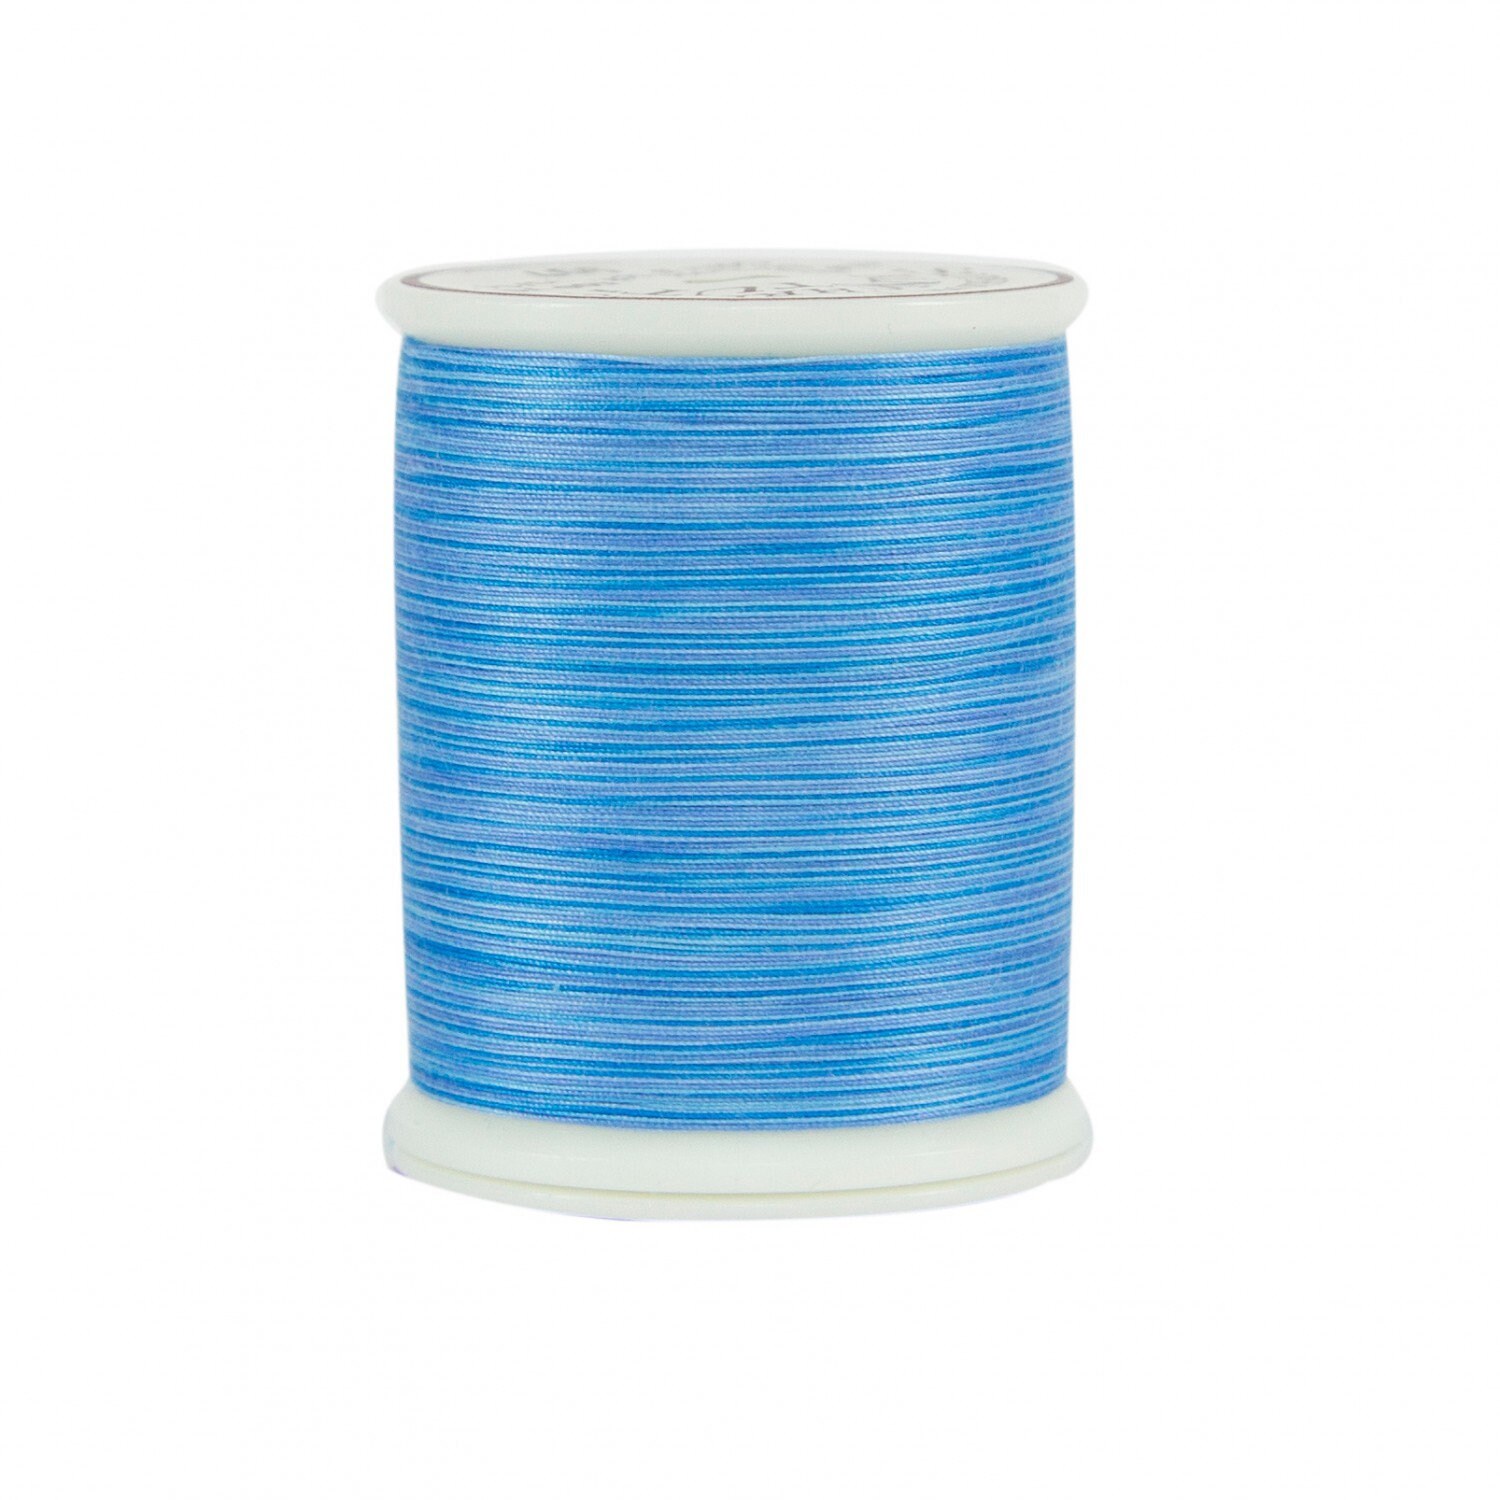 Star Cotton Thread for Sewing, Machine Quilting & Crafting Dark Navy Blue  V34 13 